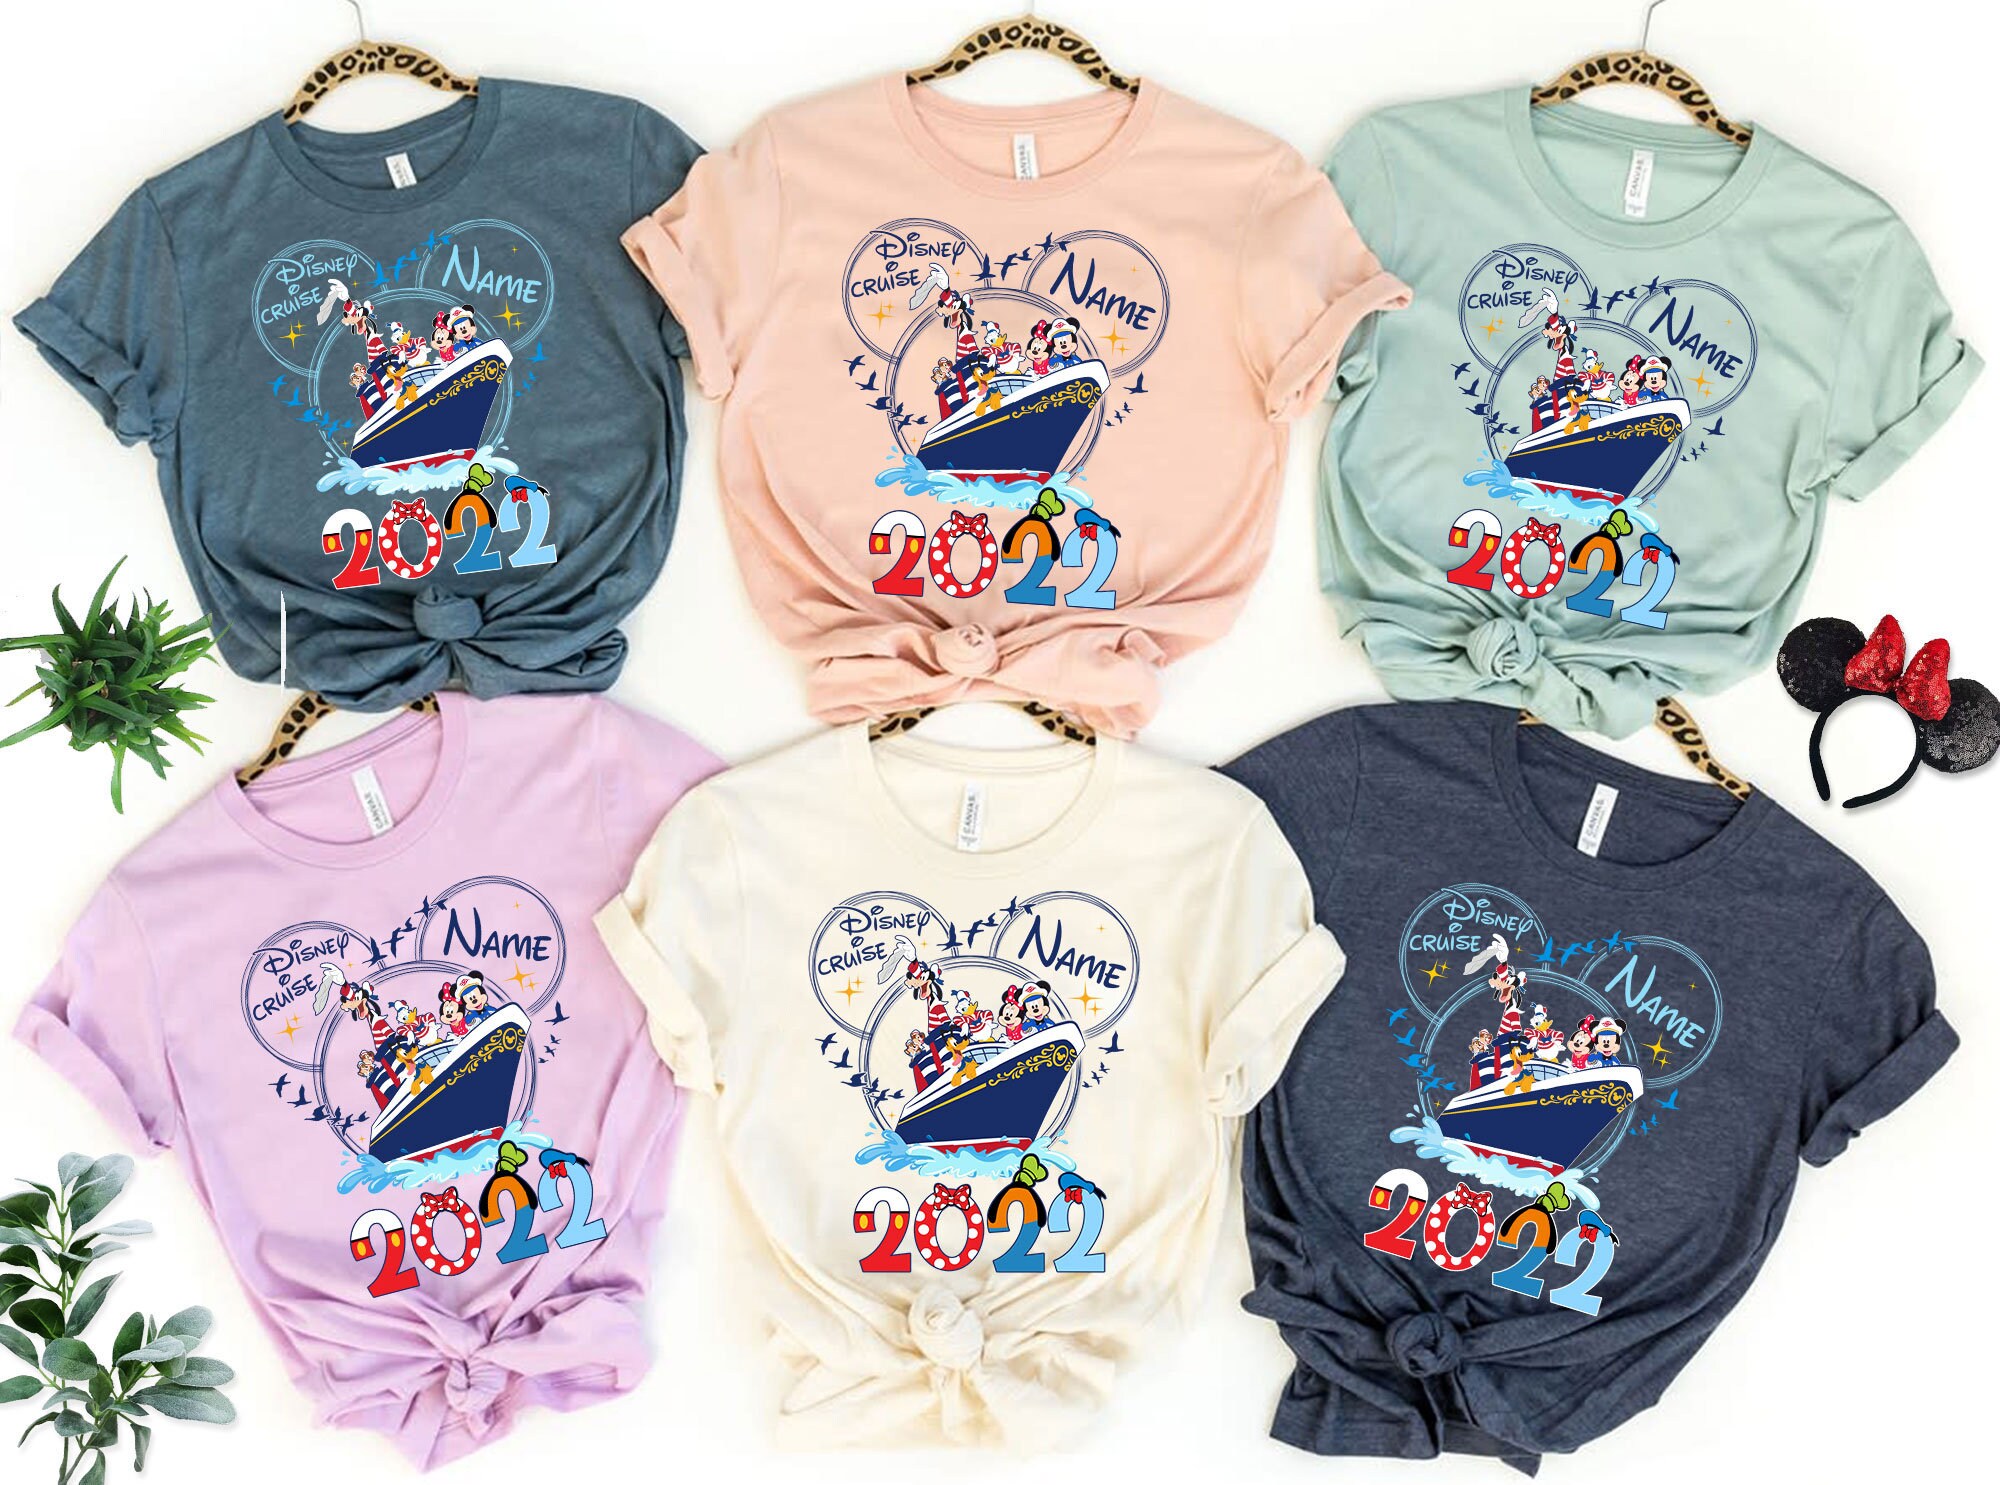 Disney Cruise Shirt, Disney Cruise 2022, Disney matching shirts